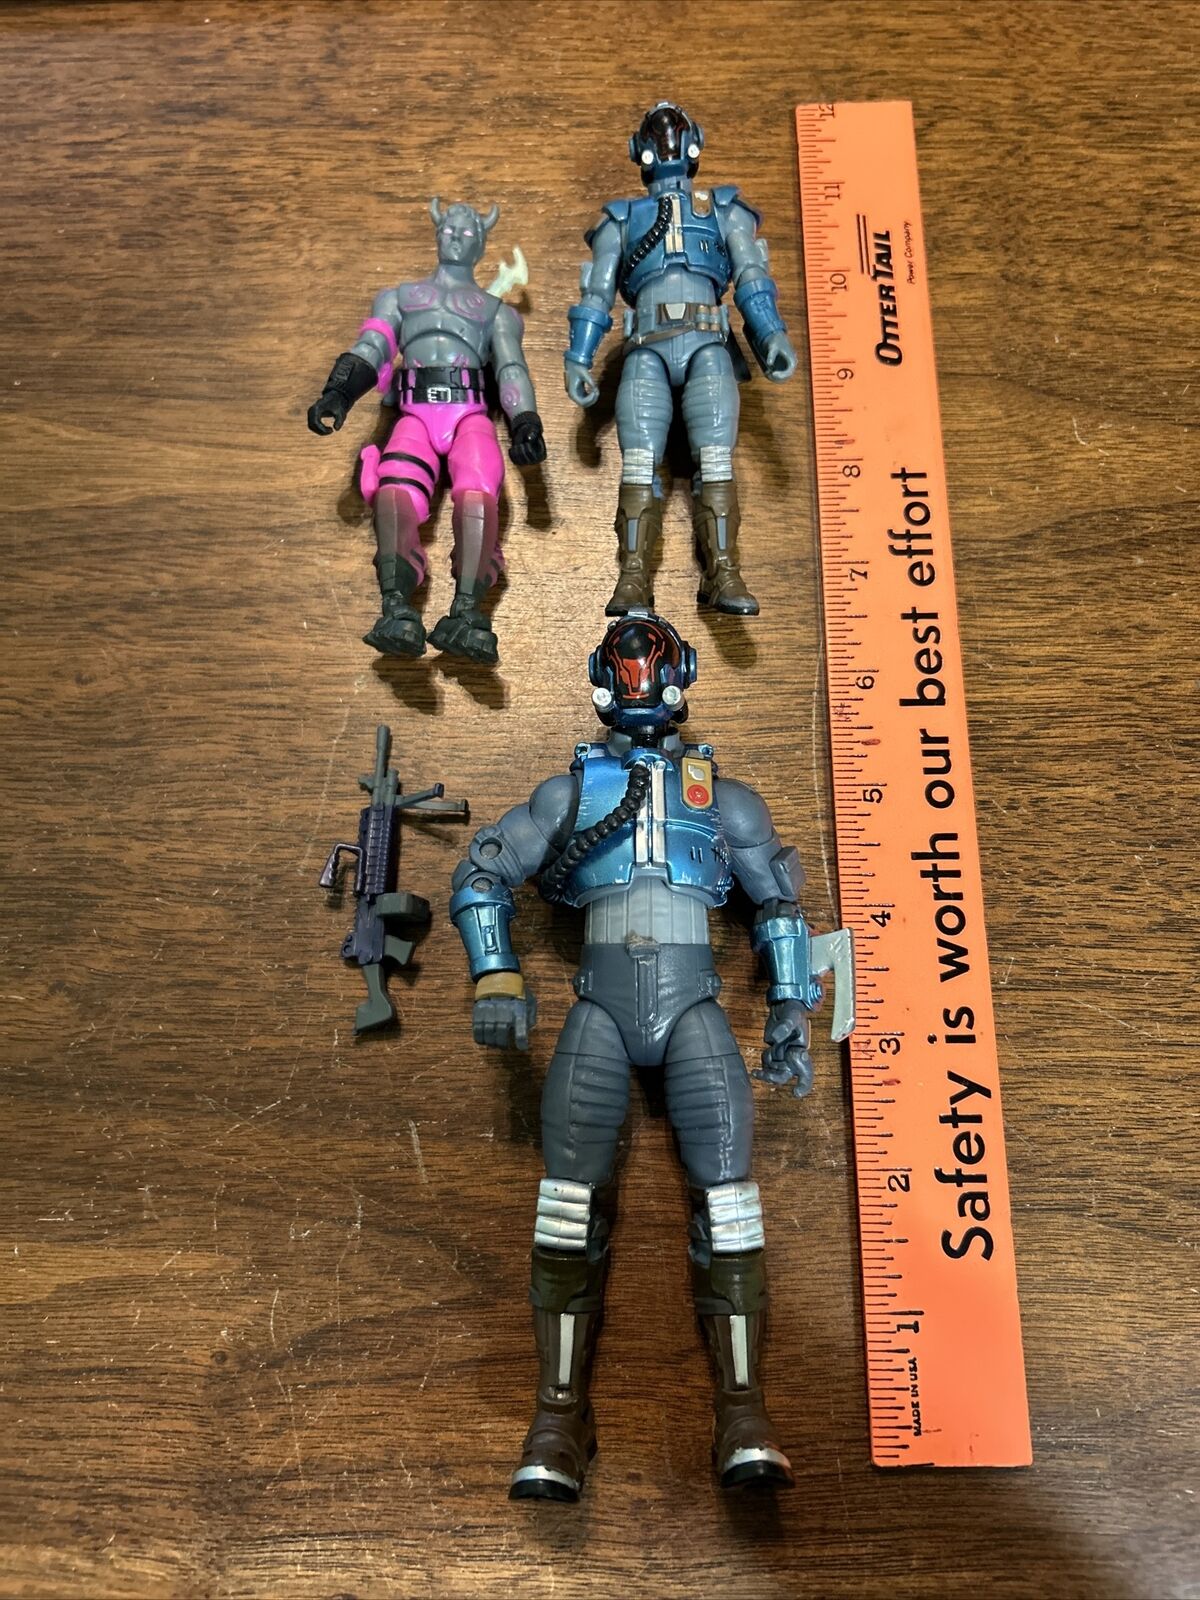 Lot of 3 Fortnite Action Figures - Fallen Love Ranger & The Visitor